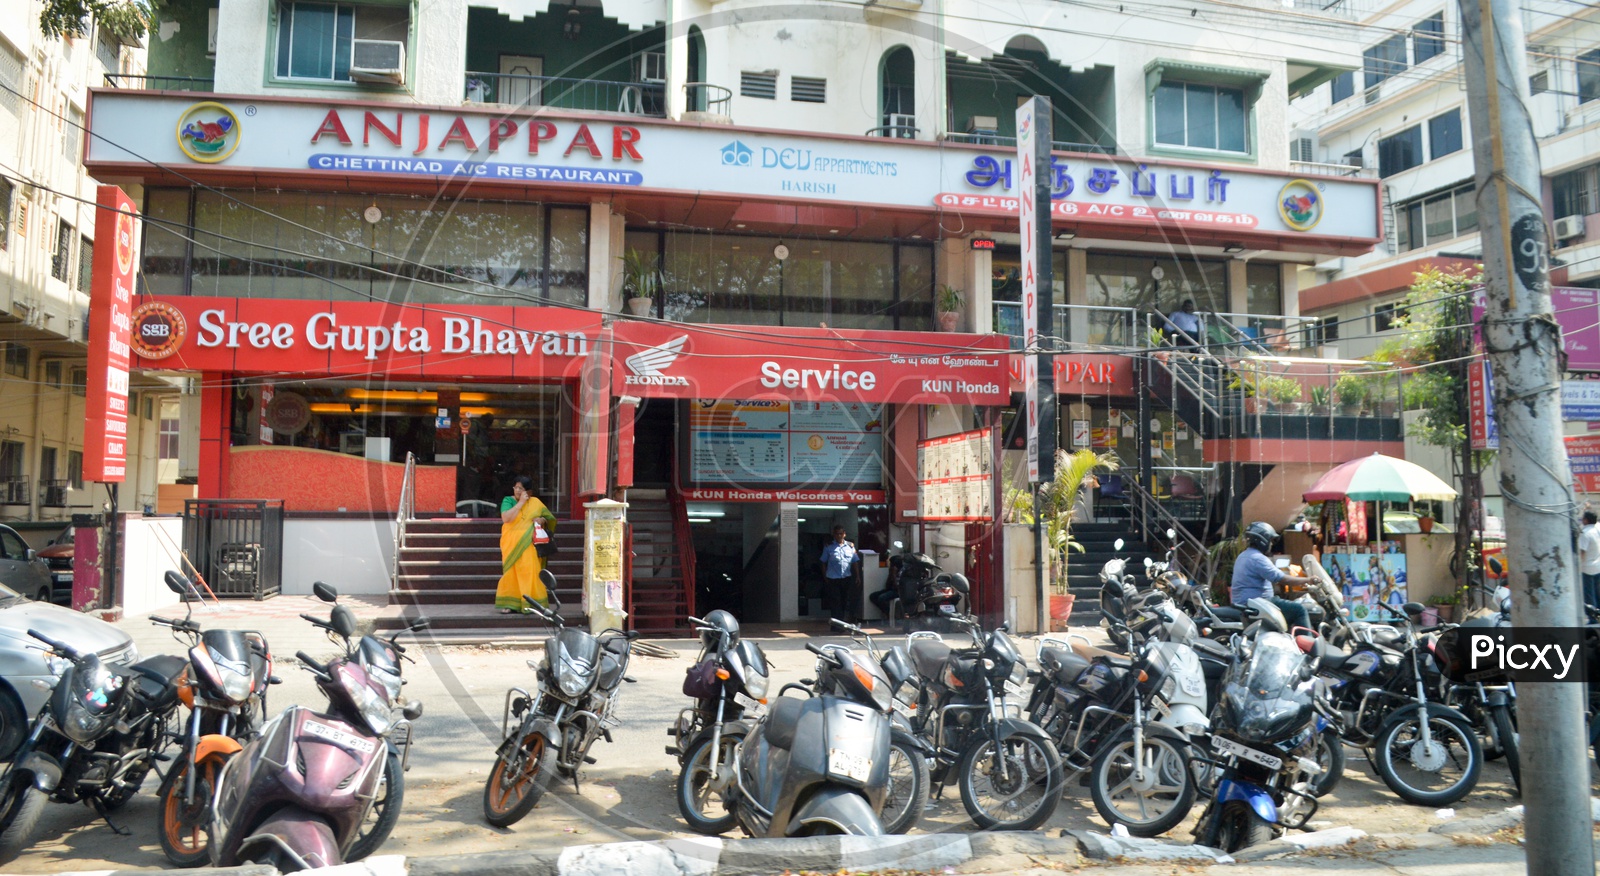 Anjappar Chettinad Restaurant ,Adyar